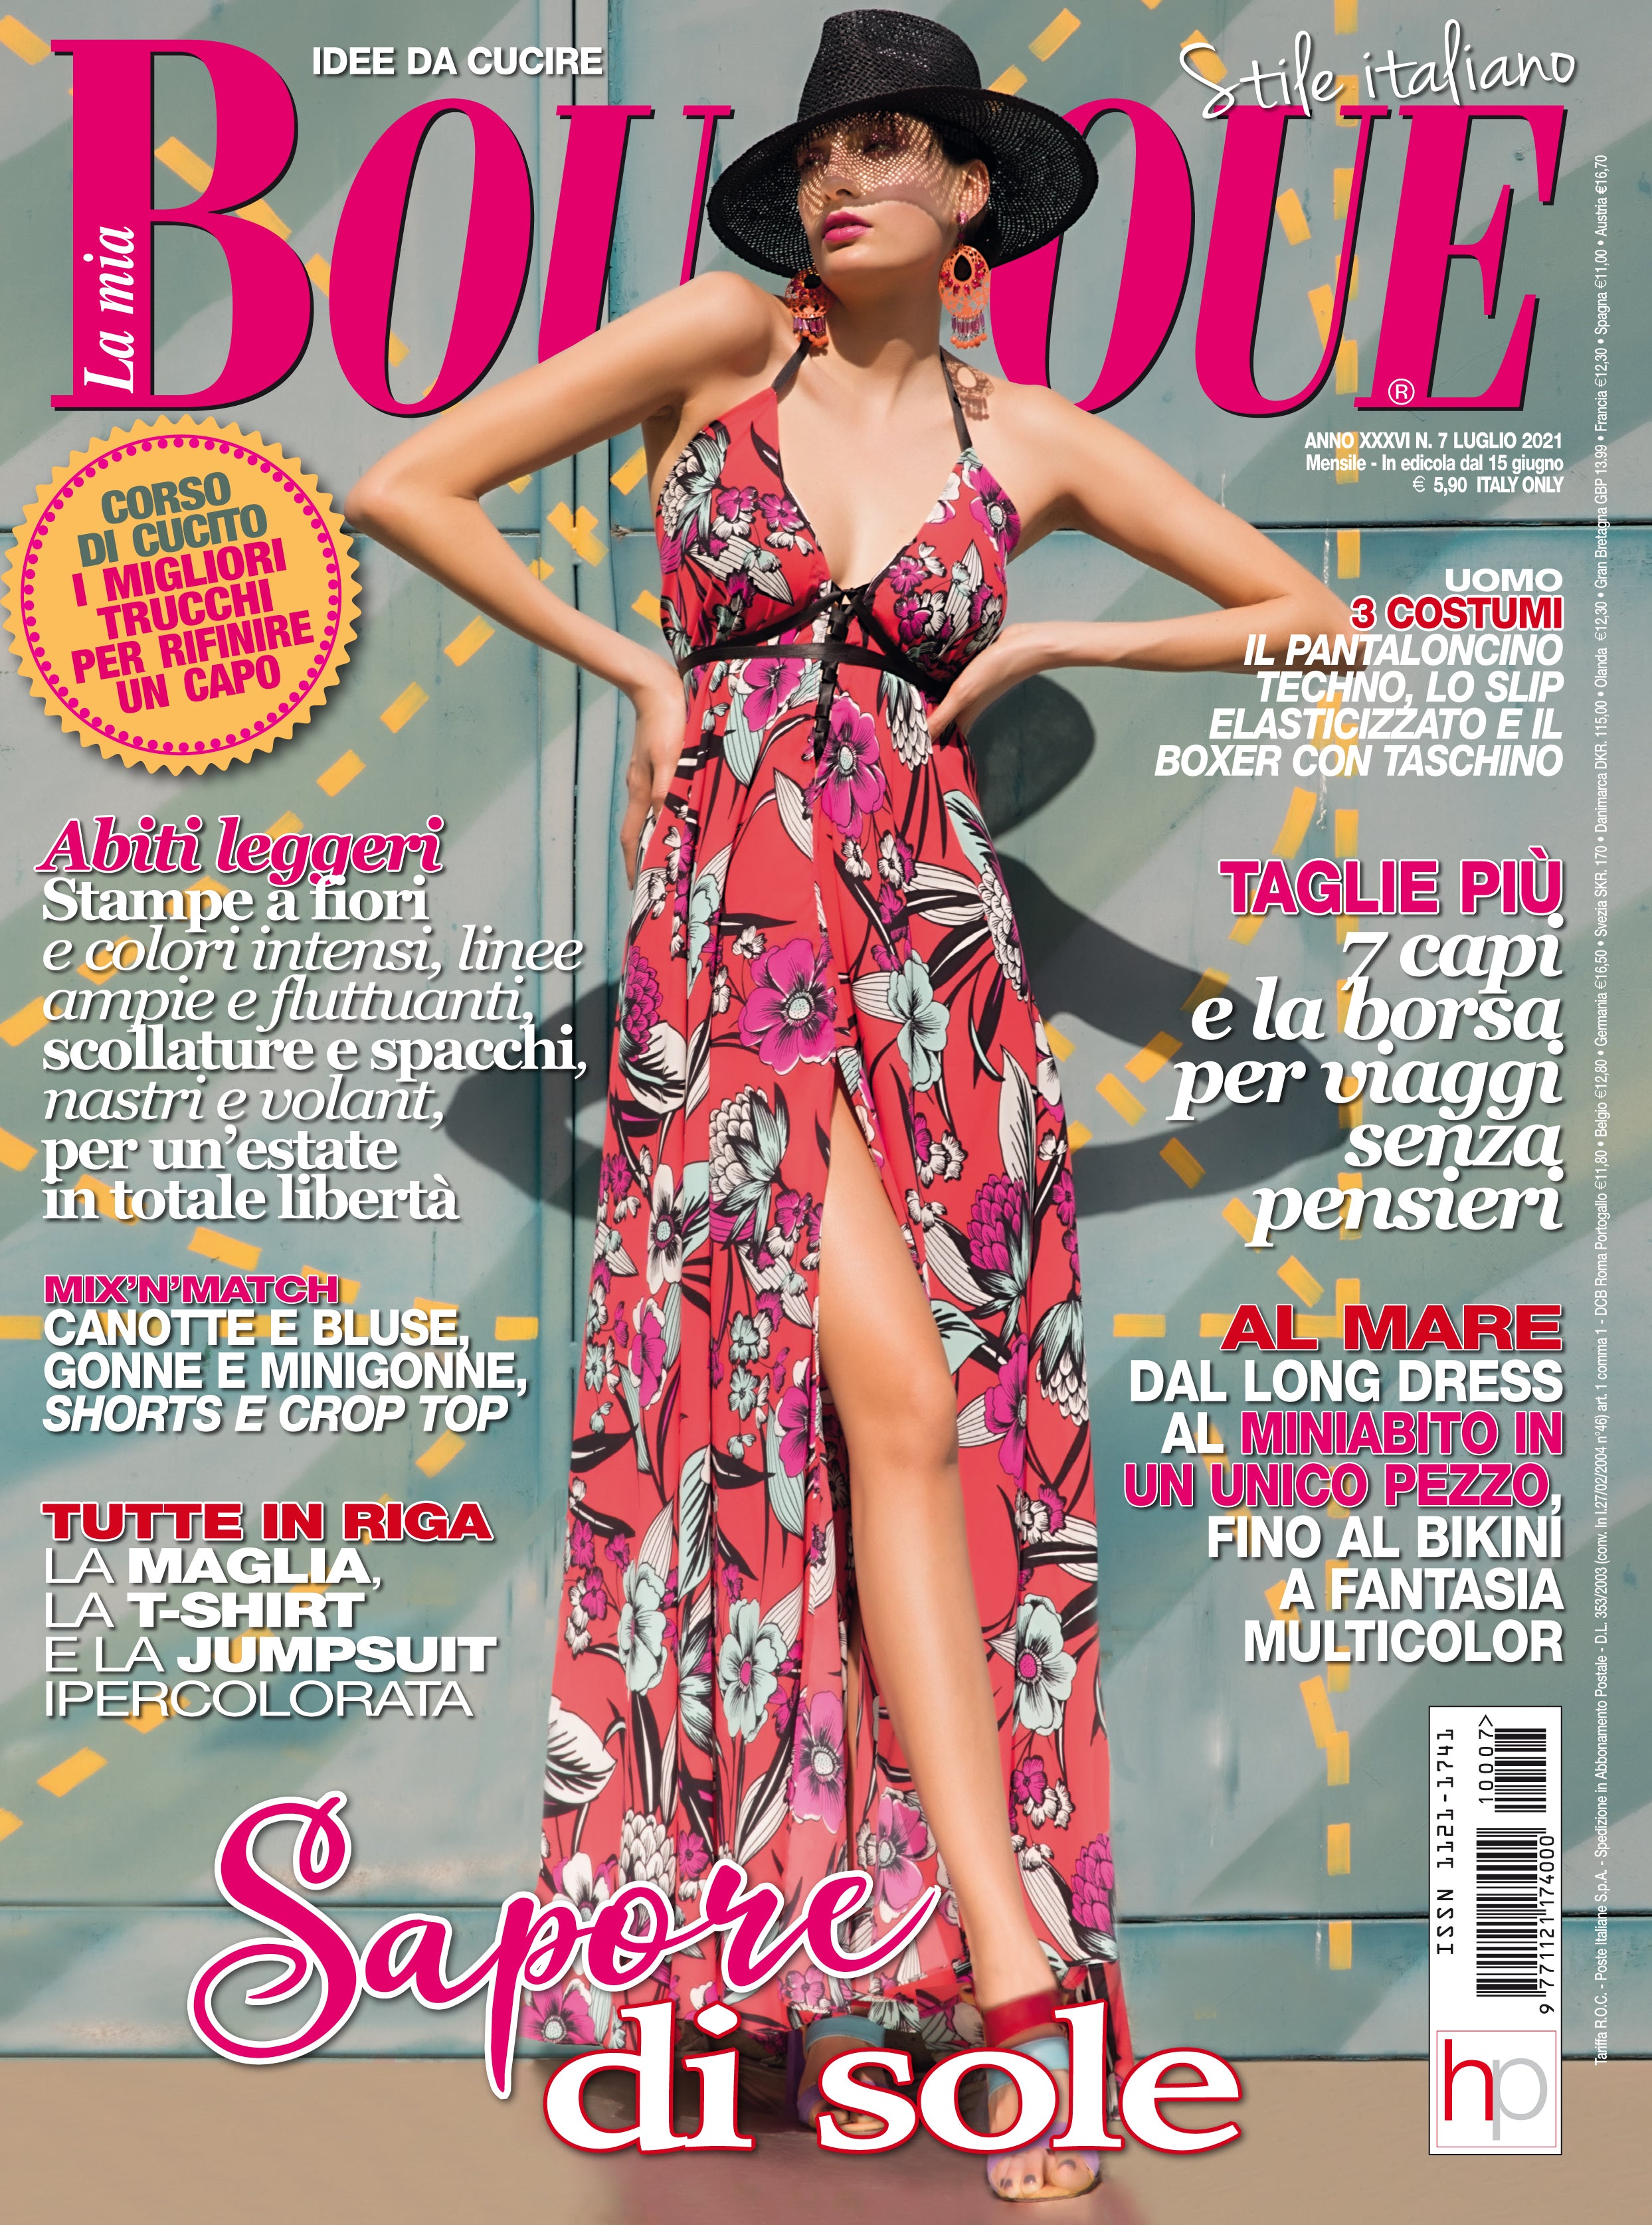 La magazine. Журнал ла Миа бутик. Журнал ла Миа бутик анонс Италия. La Mia Boutique 2022. La Mia Boutique 2023.